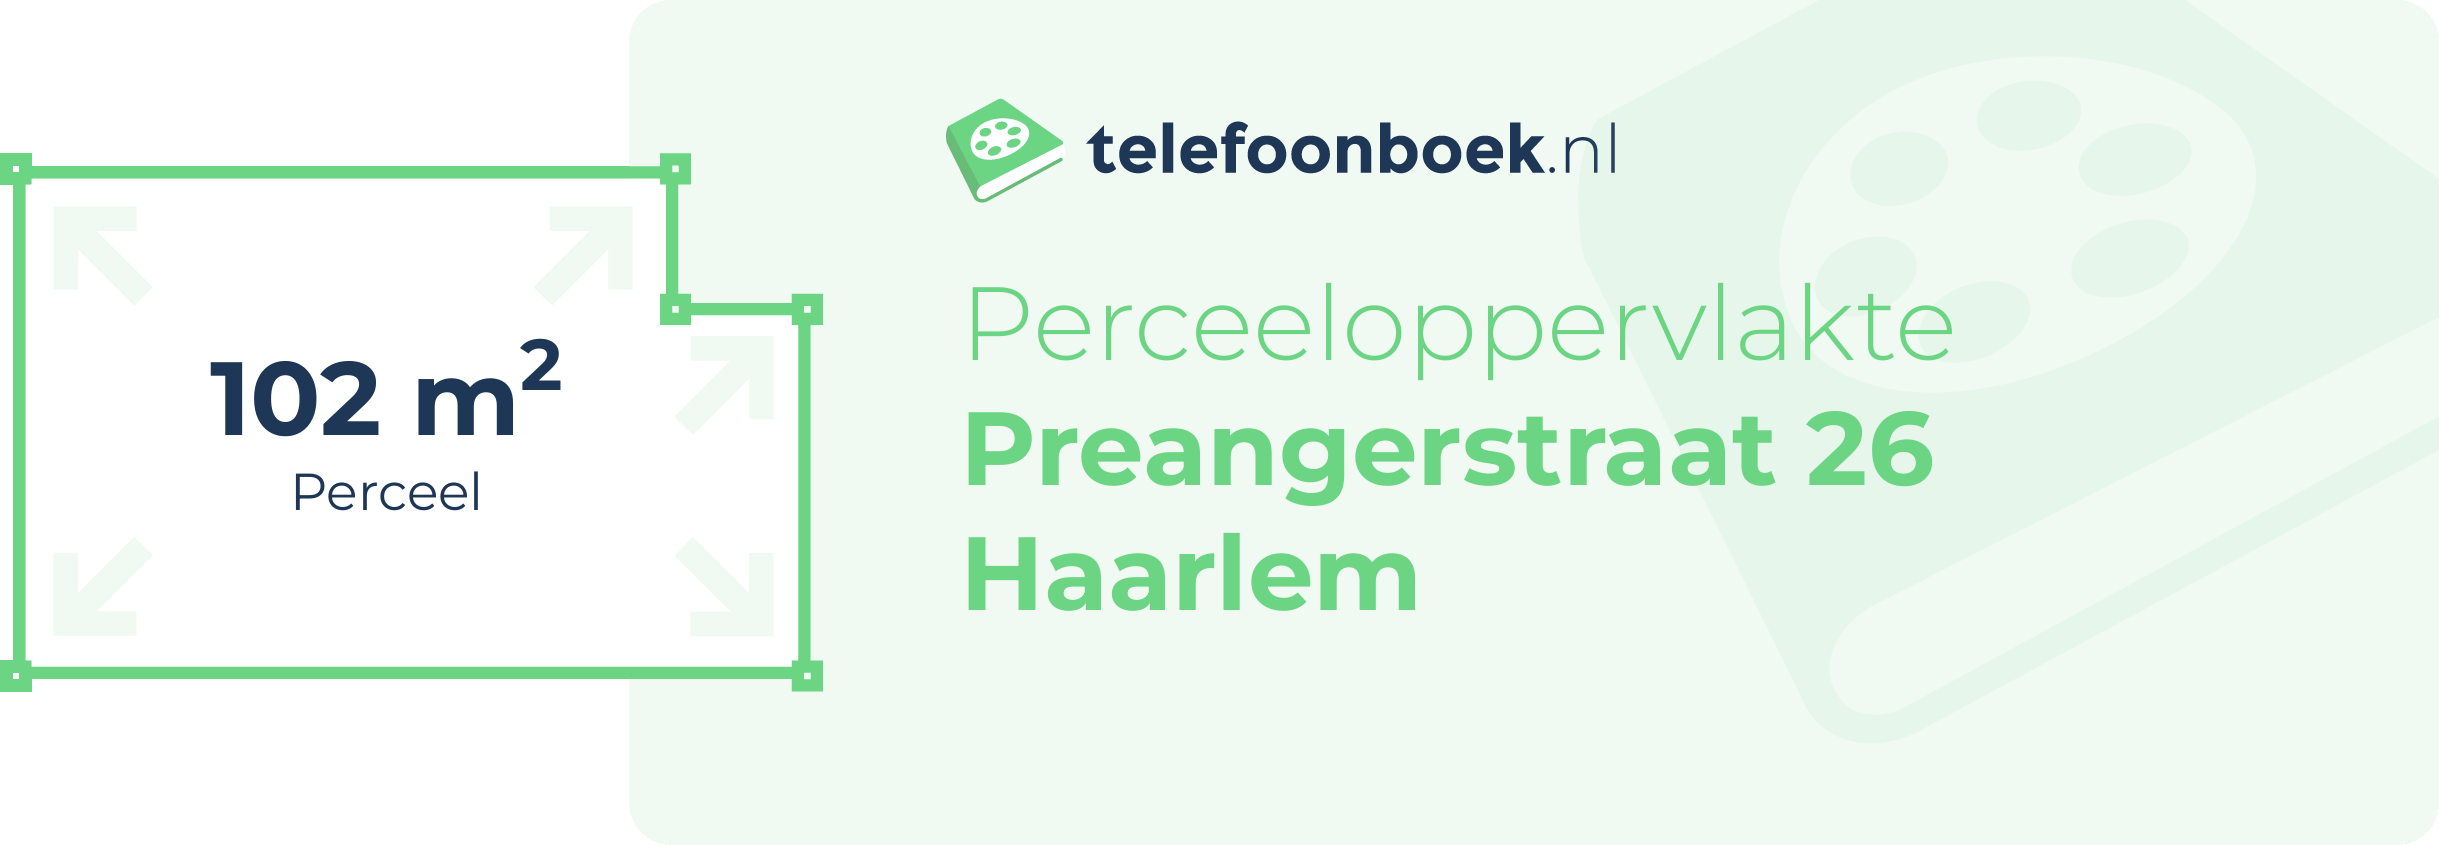 Perceeloppervlakte Preangerstraat 26 Haarlem